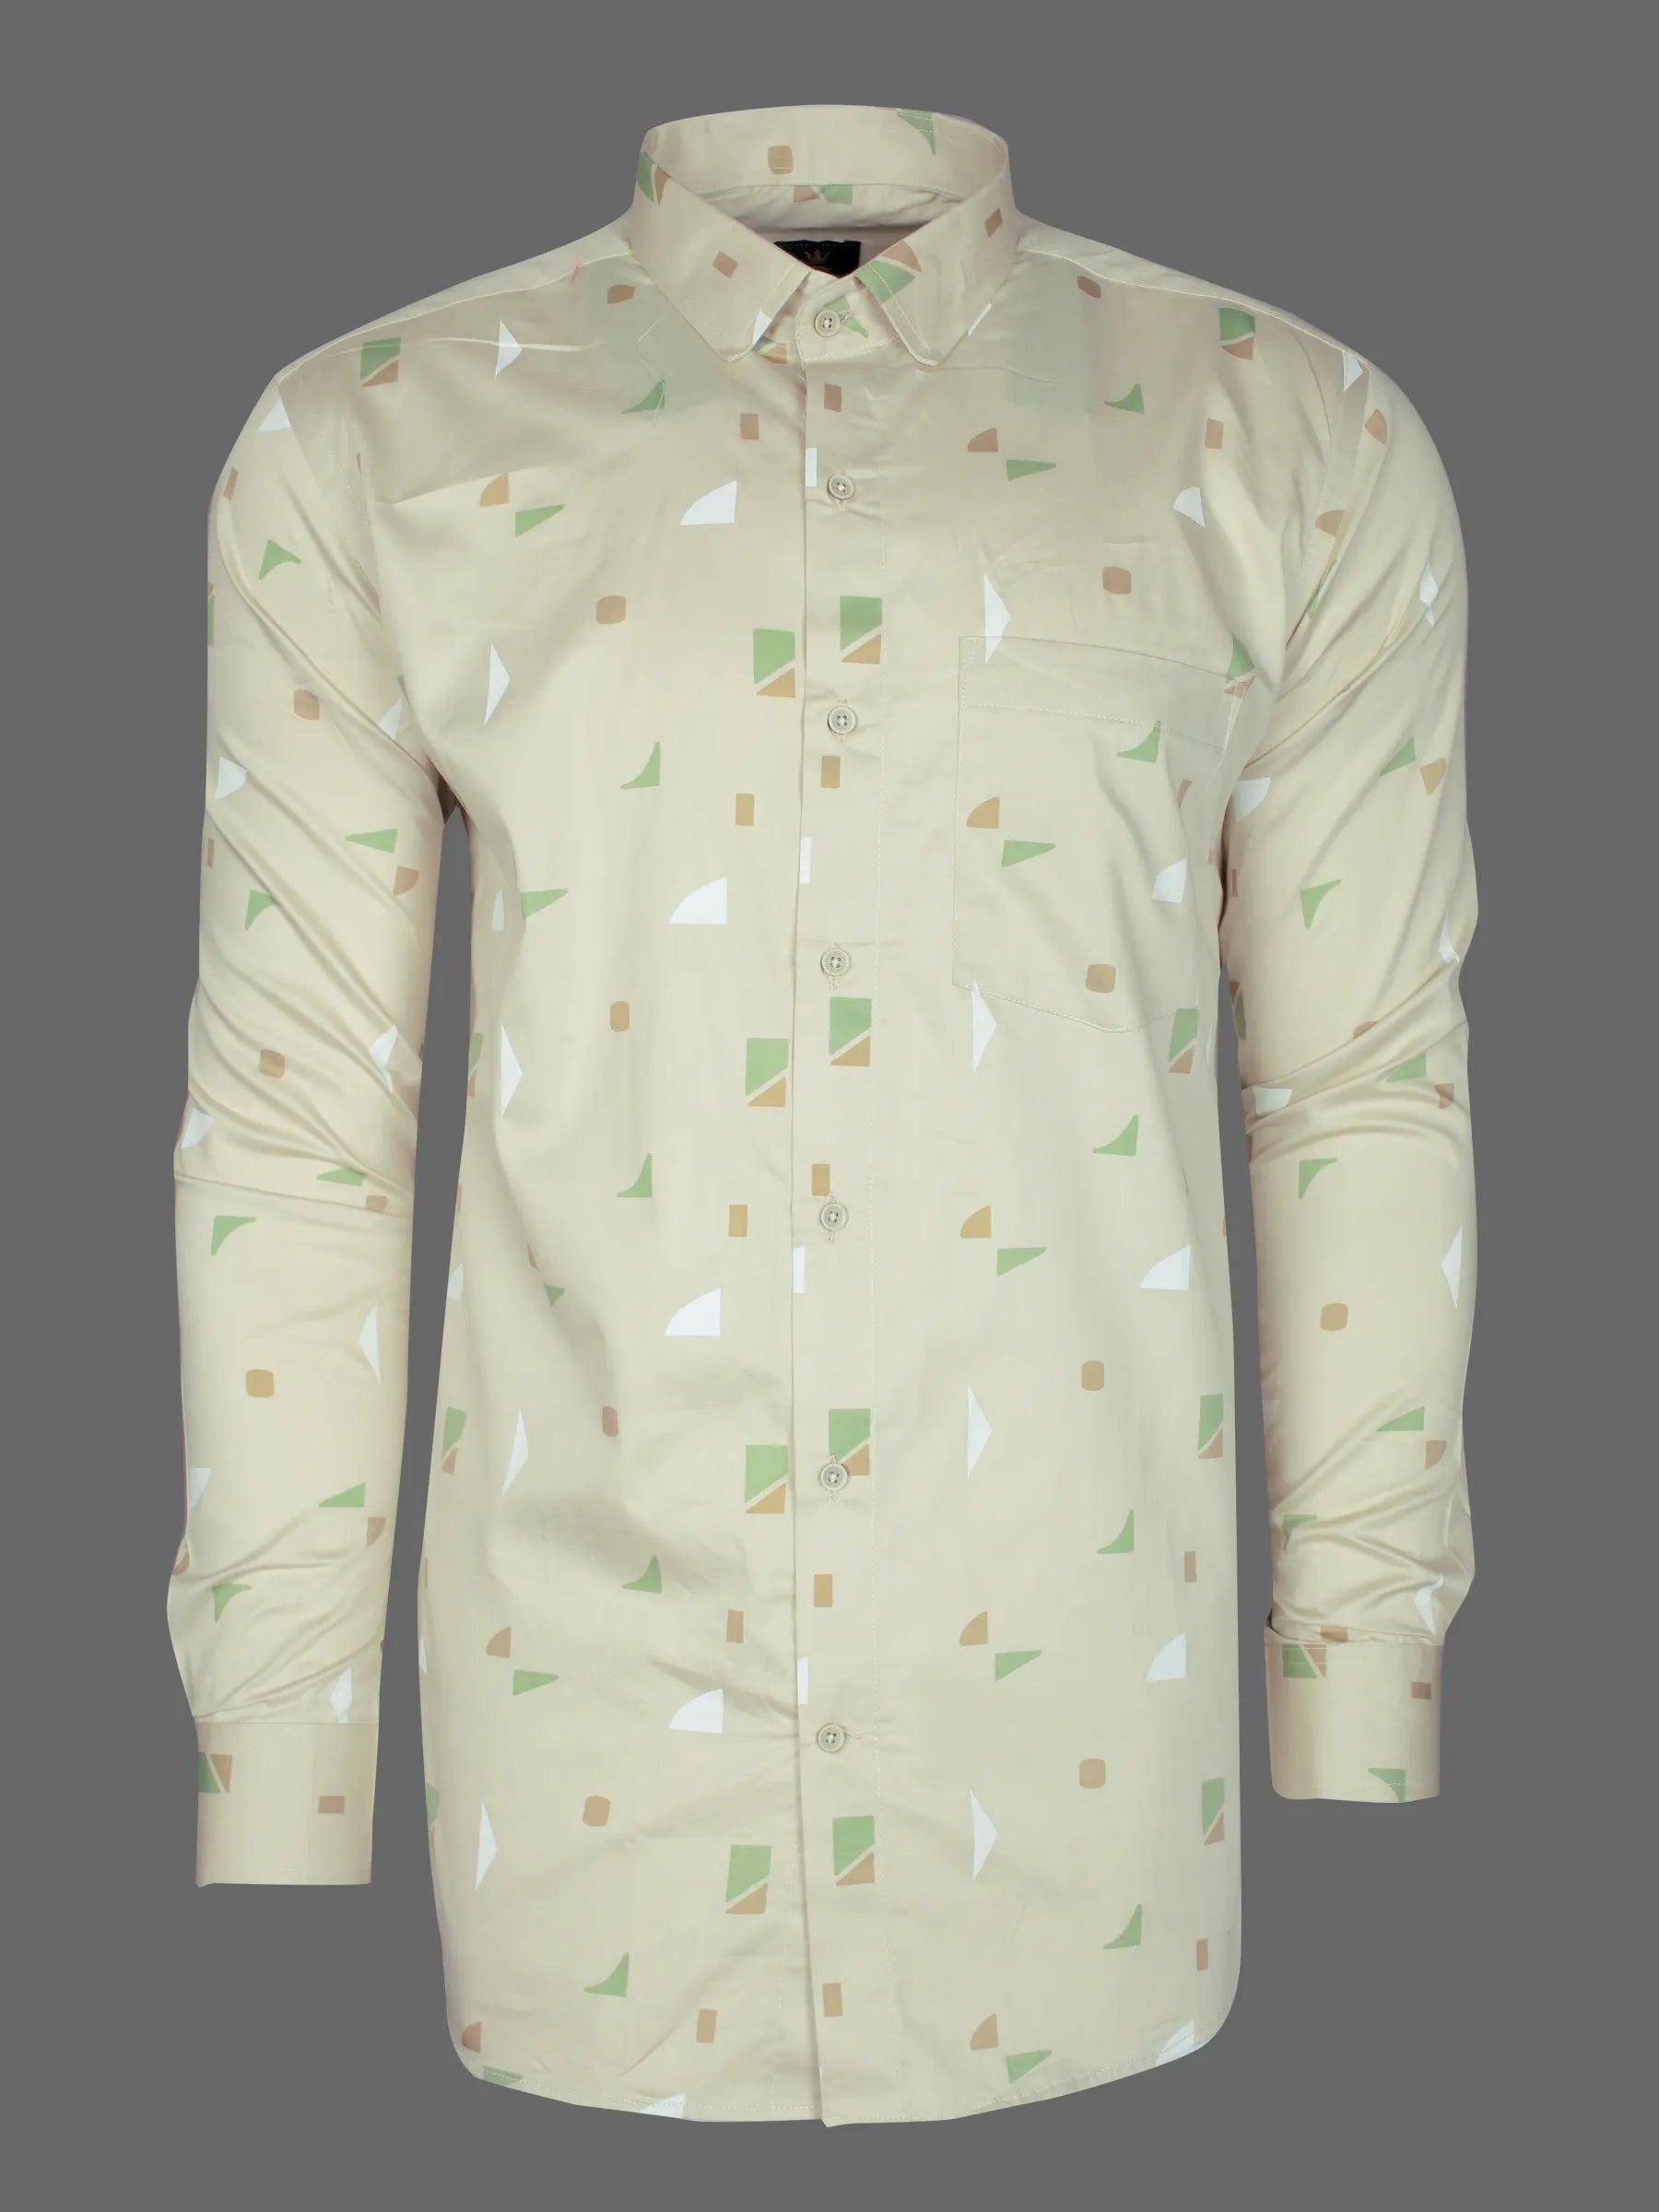 Cornsilk Cream With Multi- Textured Printed Super Luxurious Cotton Shirt-[ONSALE]